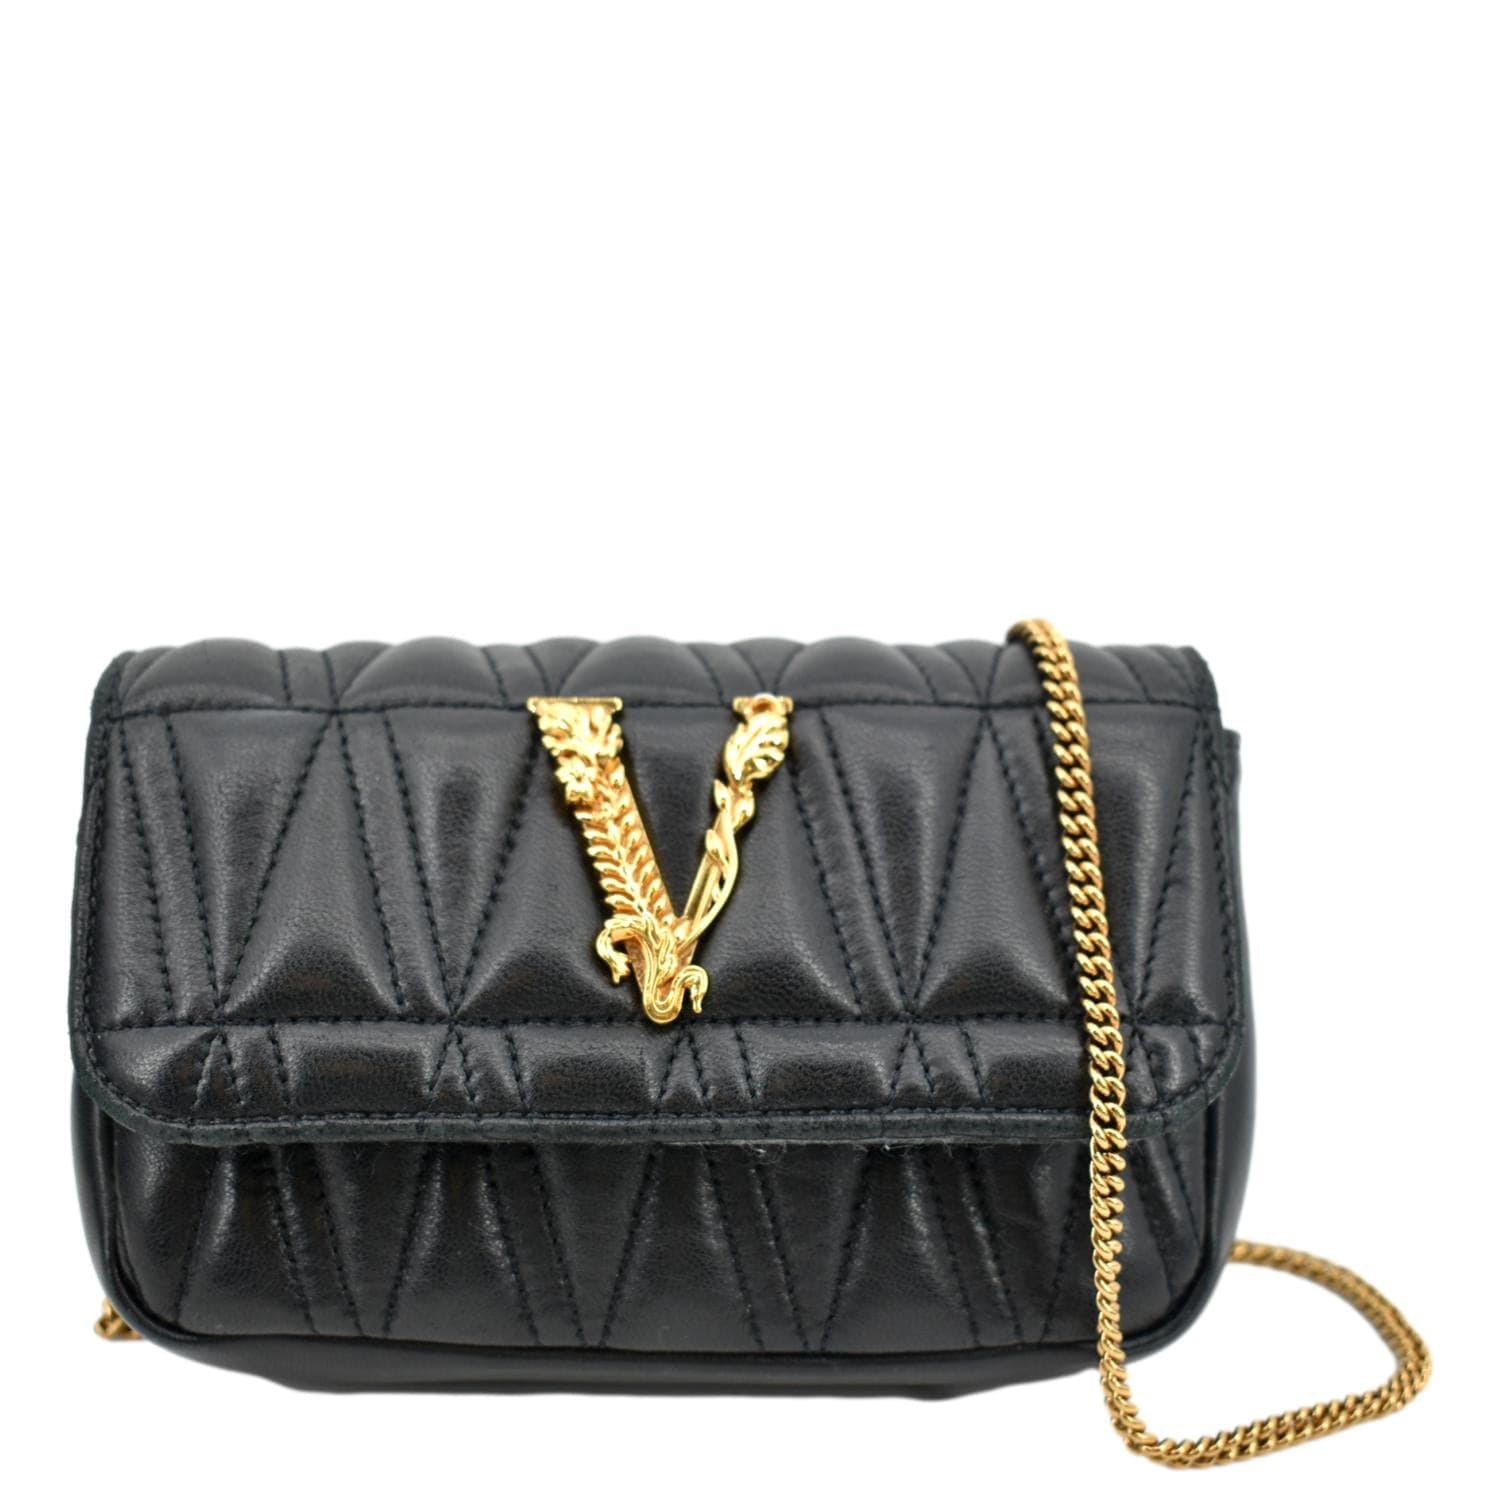 Virtus Small Leather Shoulder Bag in Black - Versace